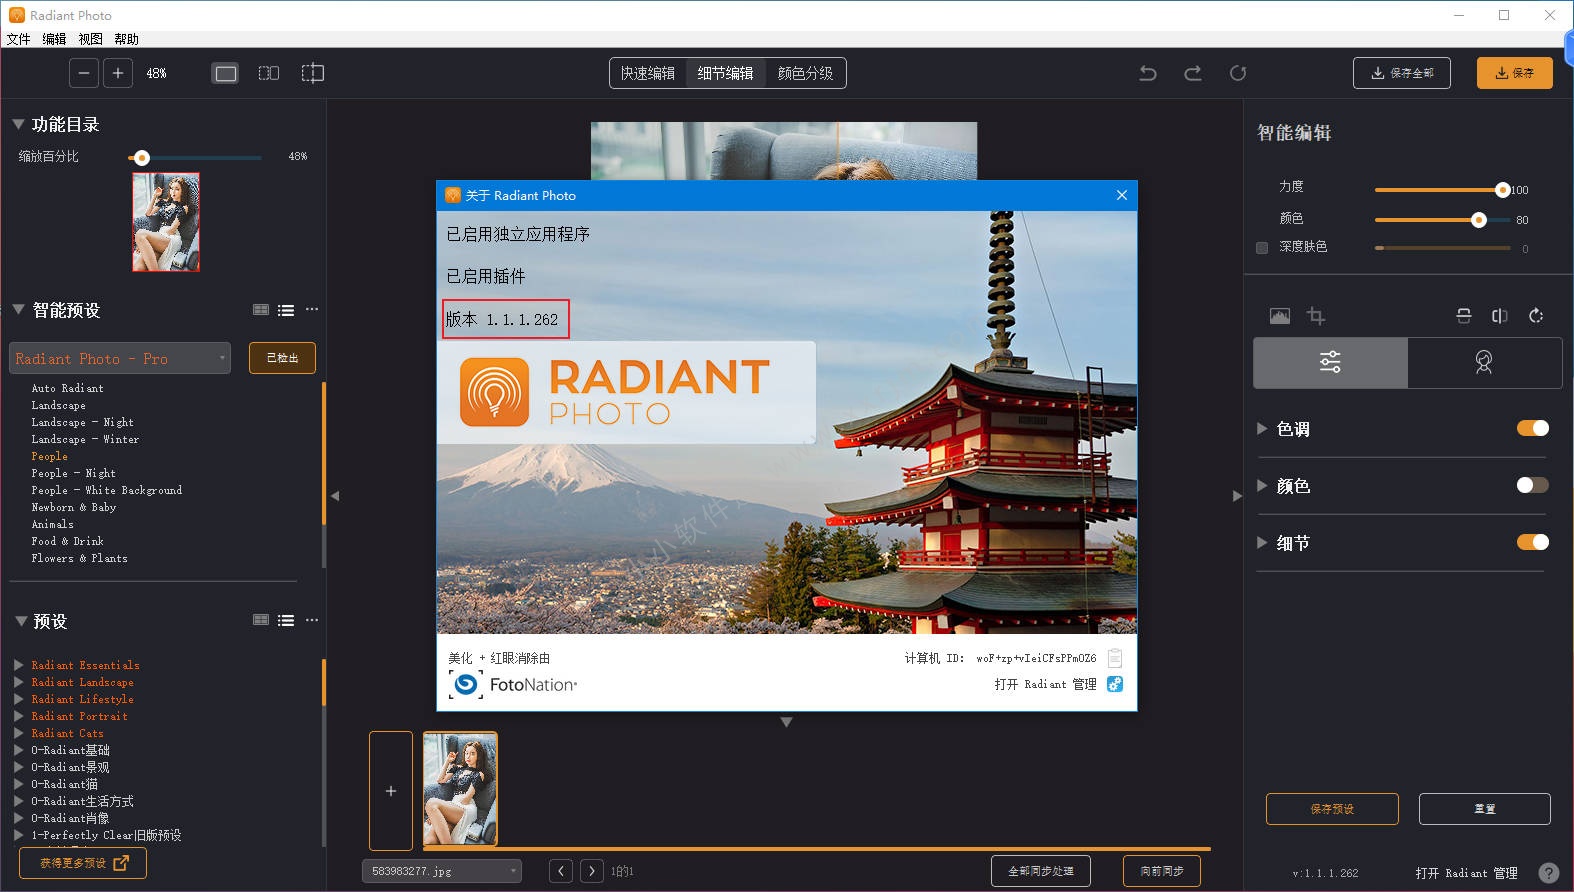 Radiant Photo 1.1.1.262 x64 中文版含汉化预设-AI智能照片处理软件